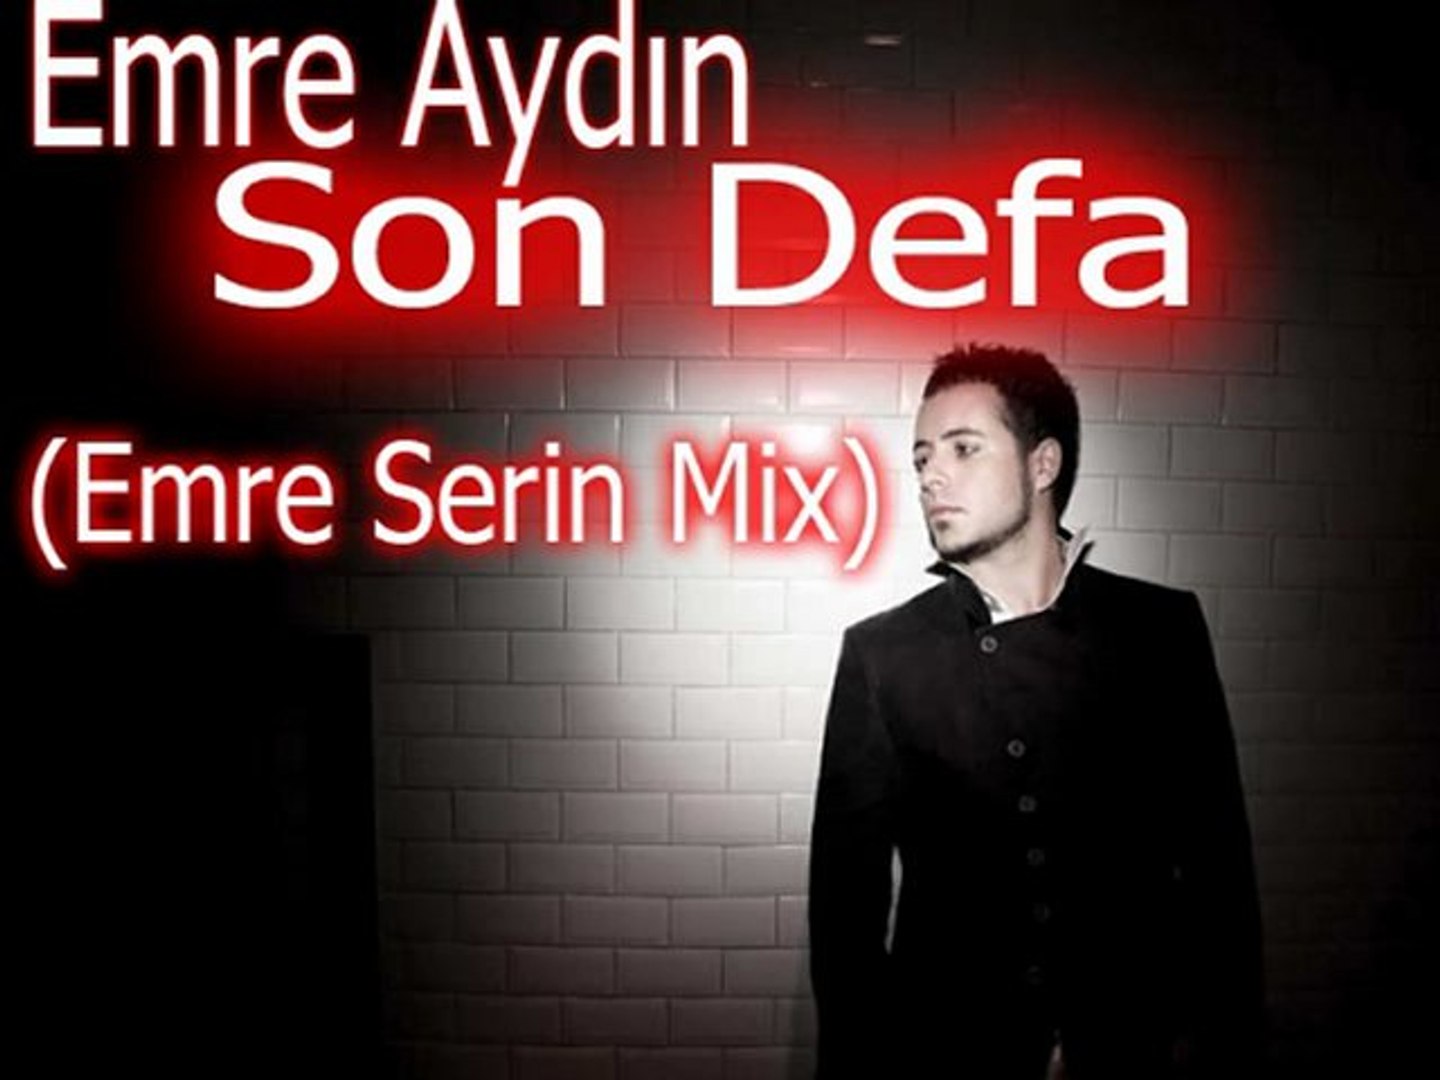 EMRE AYDIN-SON DEFA(Emre Serin Mix) - Dailymotion Video